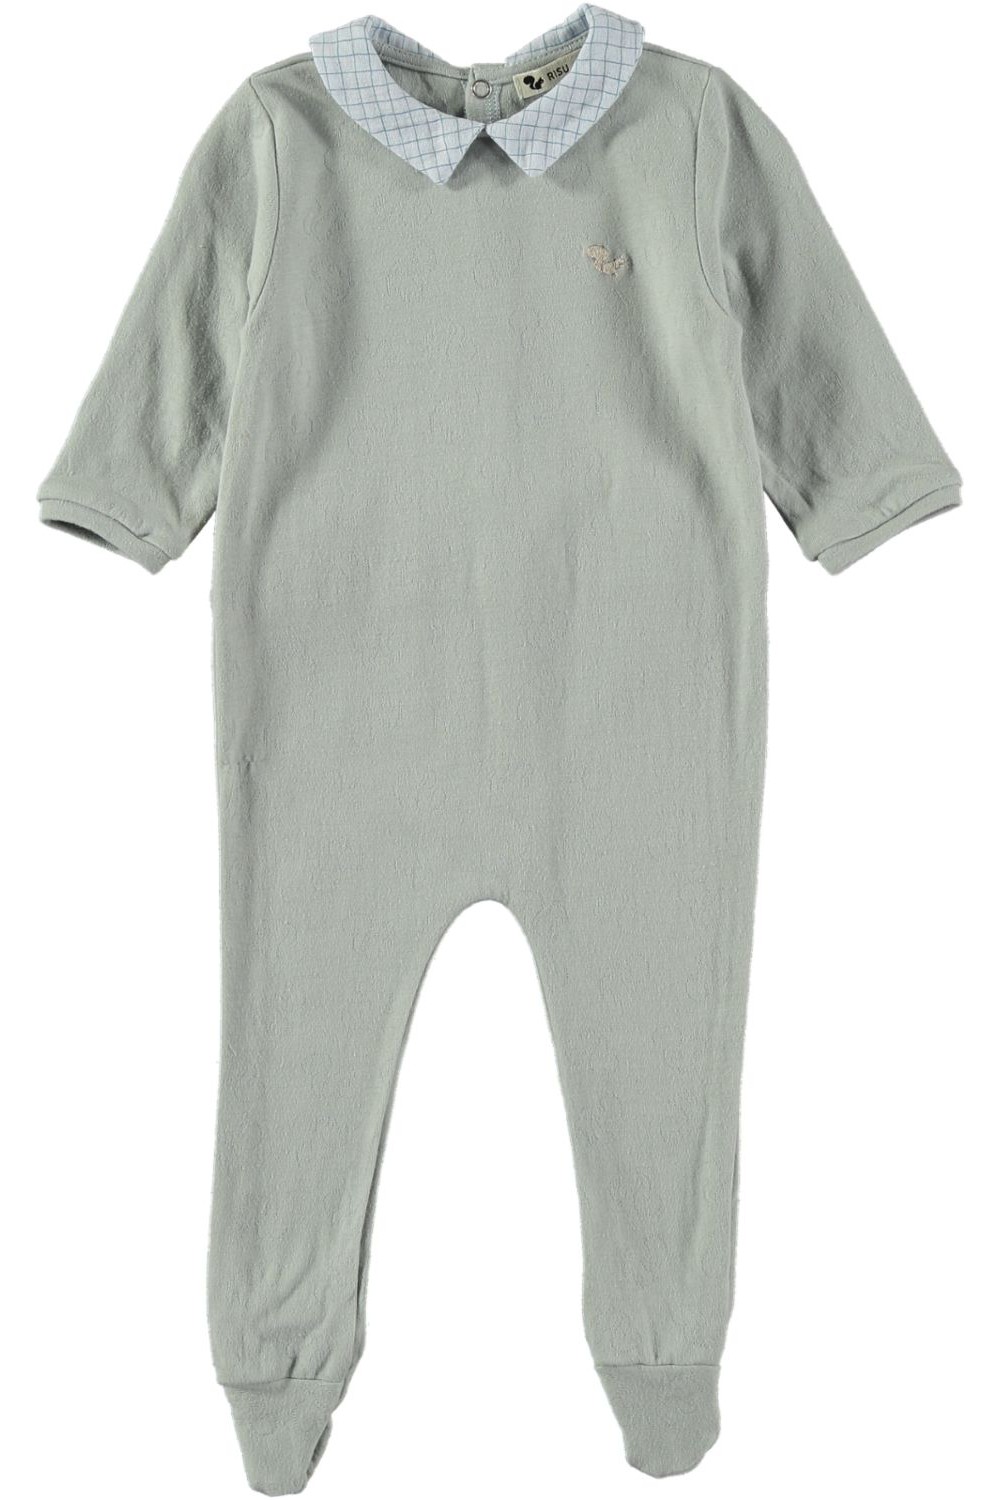 Dodu baby pyjamas blue organic cotton jersey